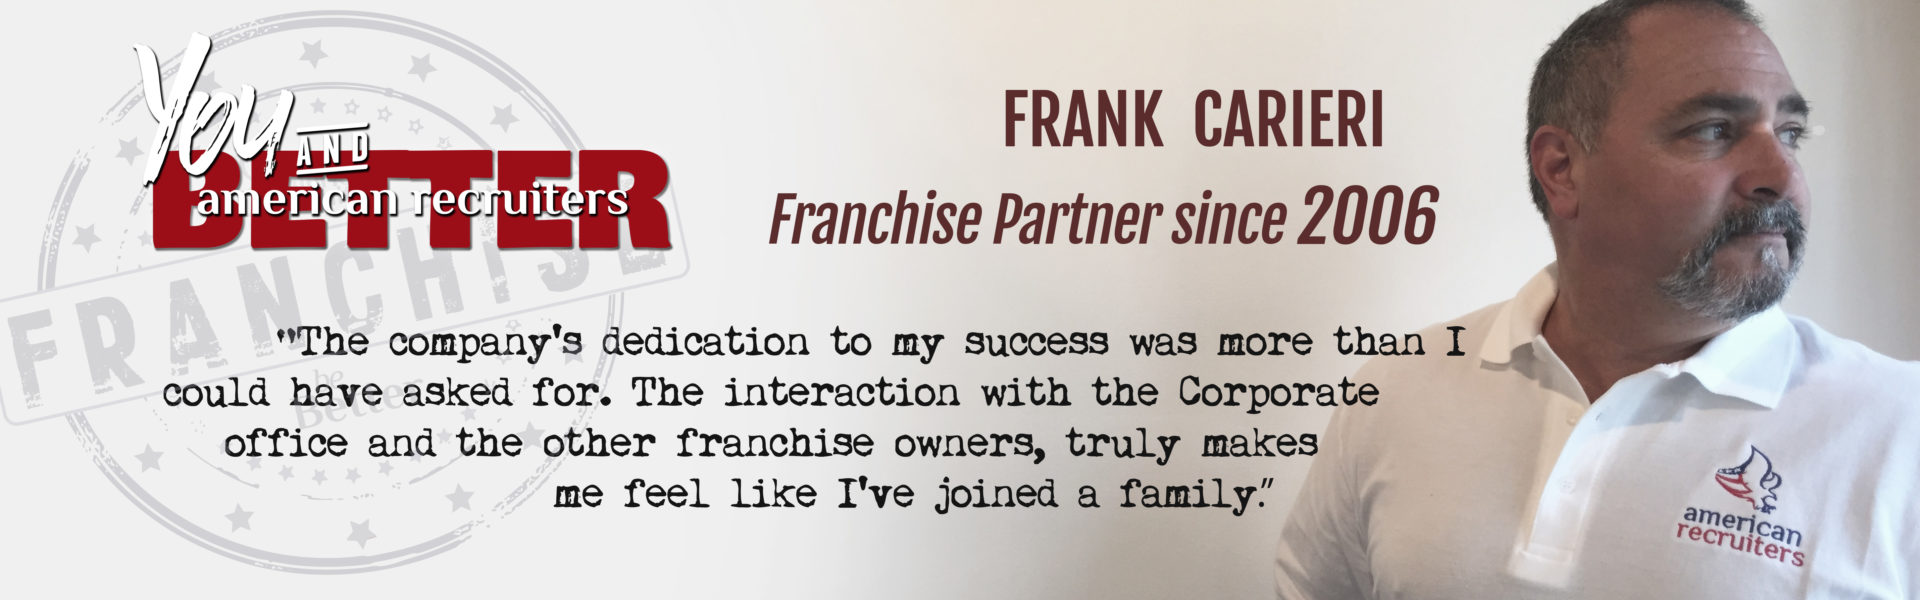 franchise-owner-testimonial-frank-carieri